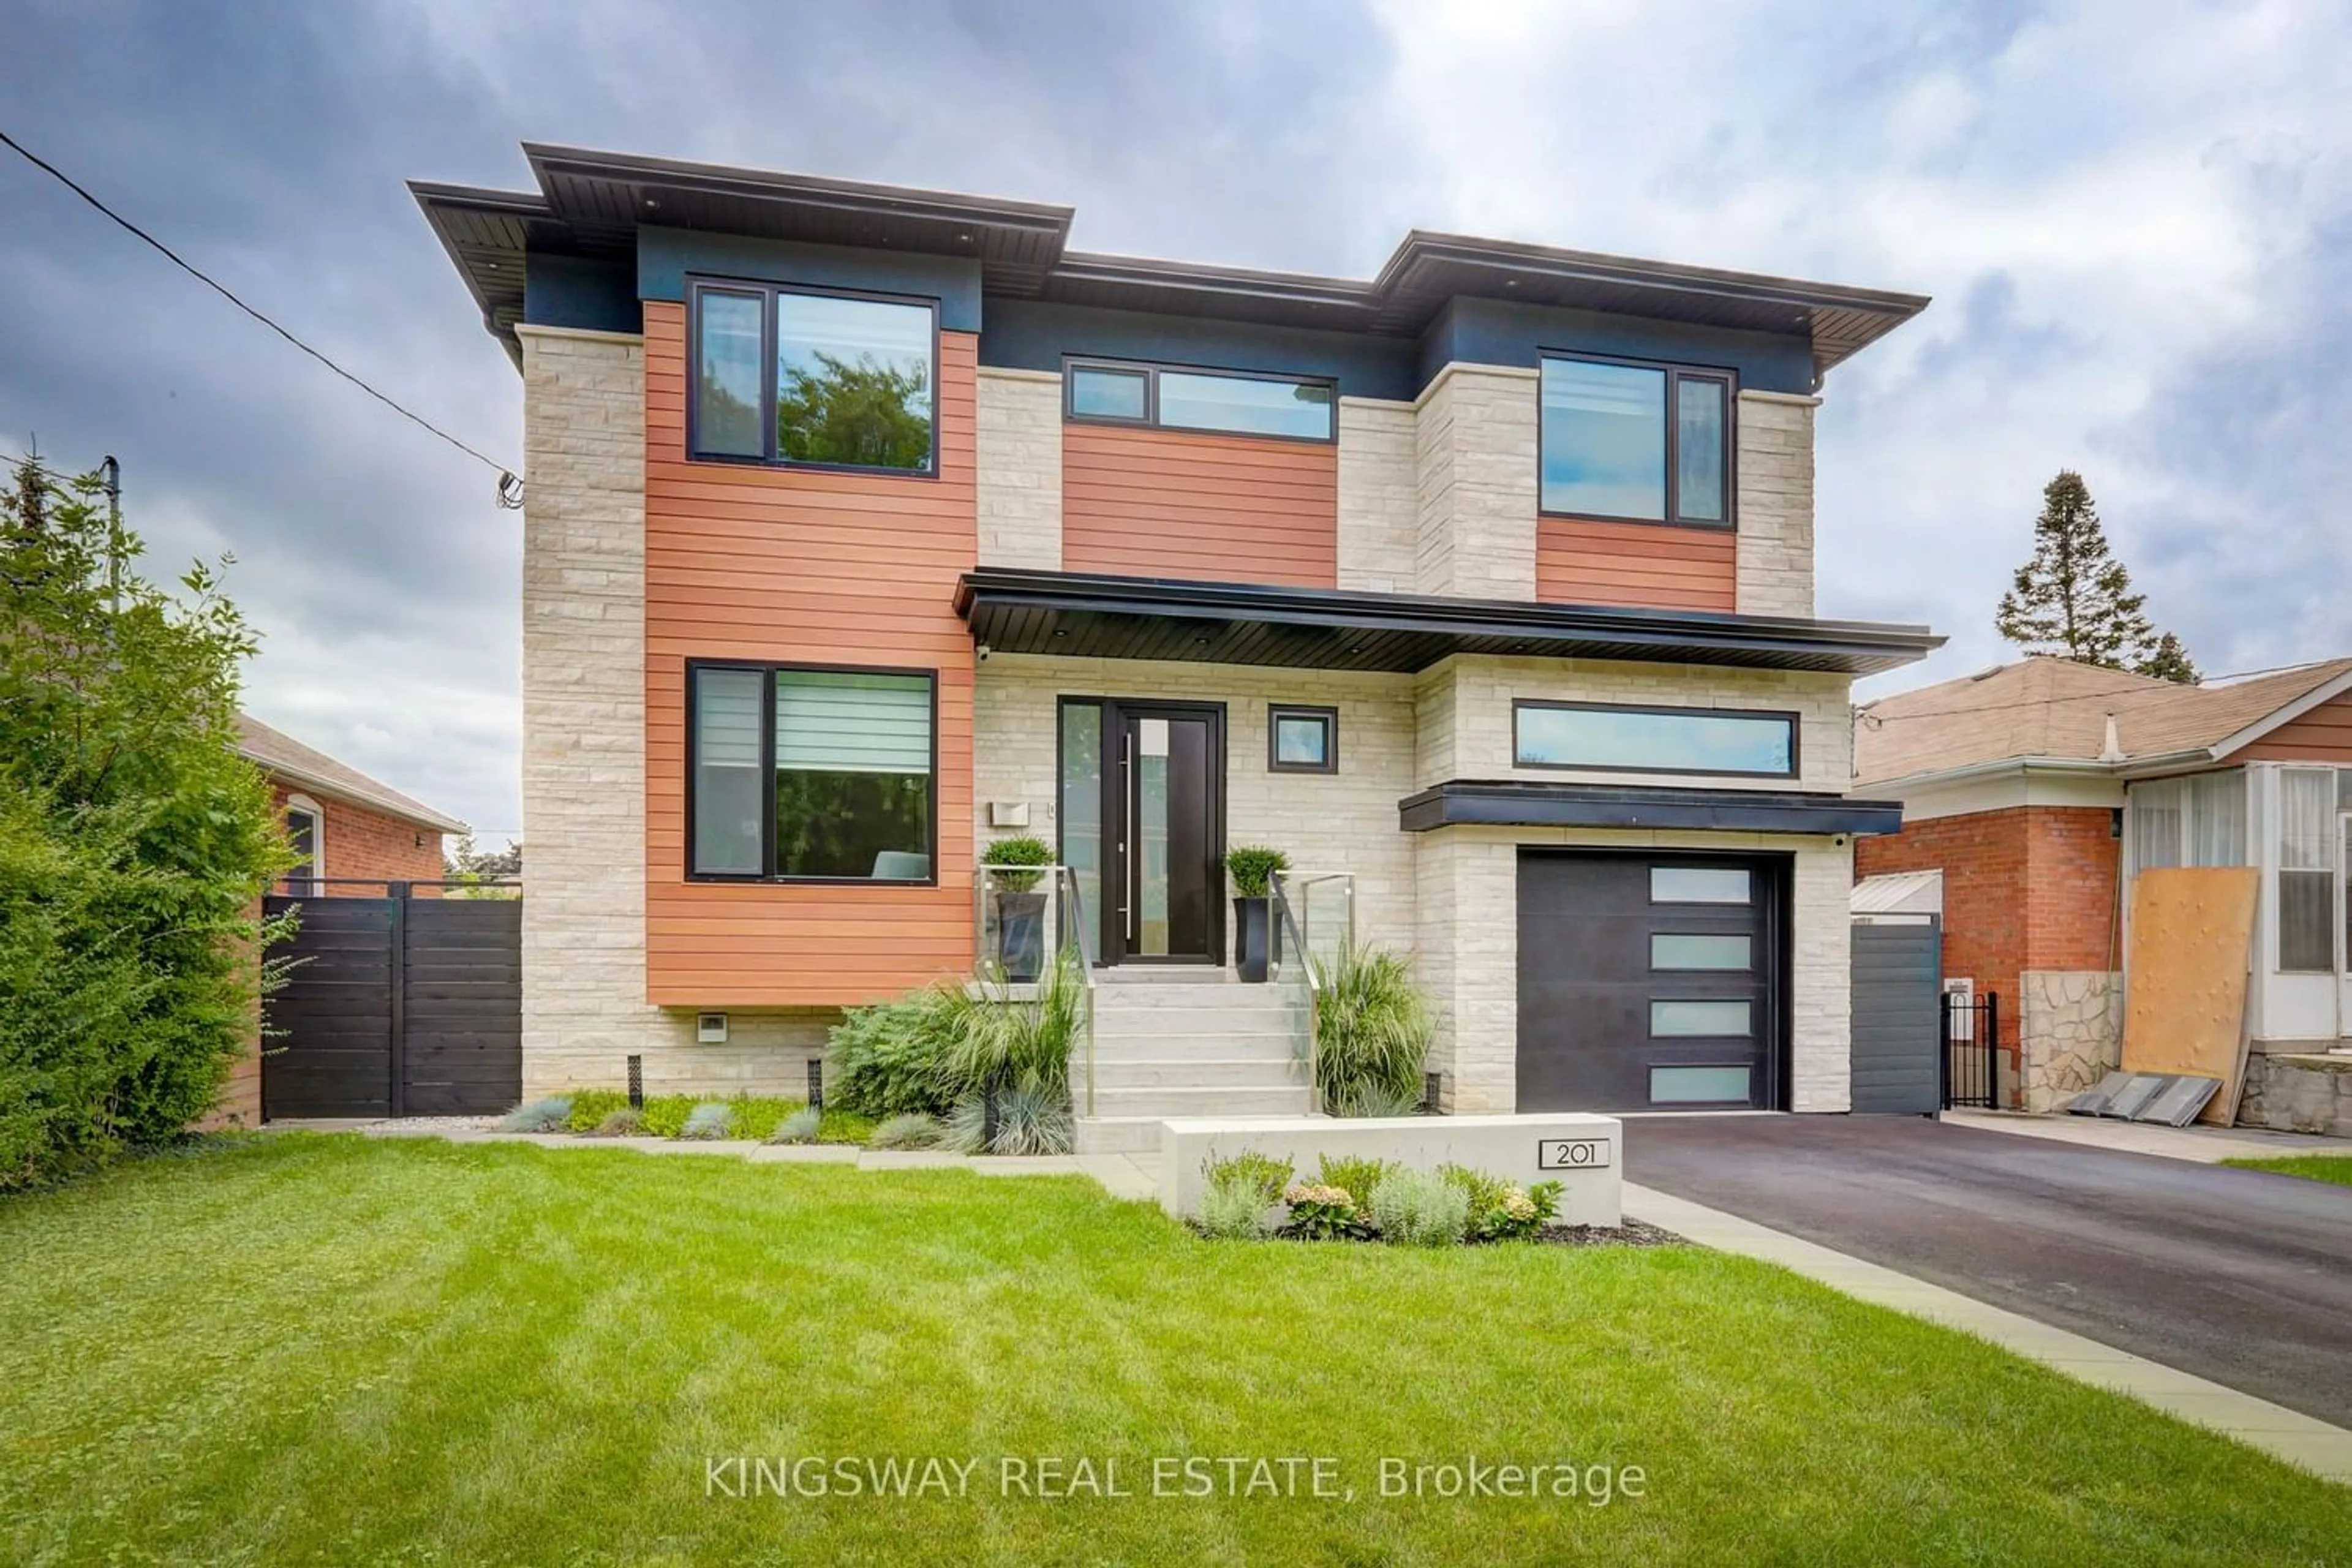 Home with brick exterior material for 201 Van Dusen Blvd, Toronto Ontario M8Z 3H7